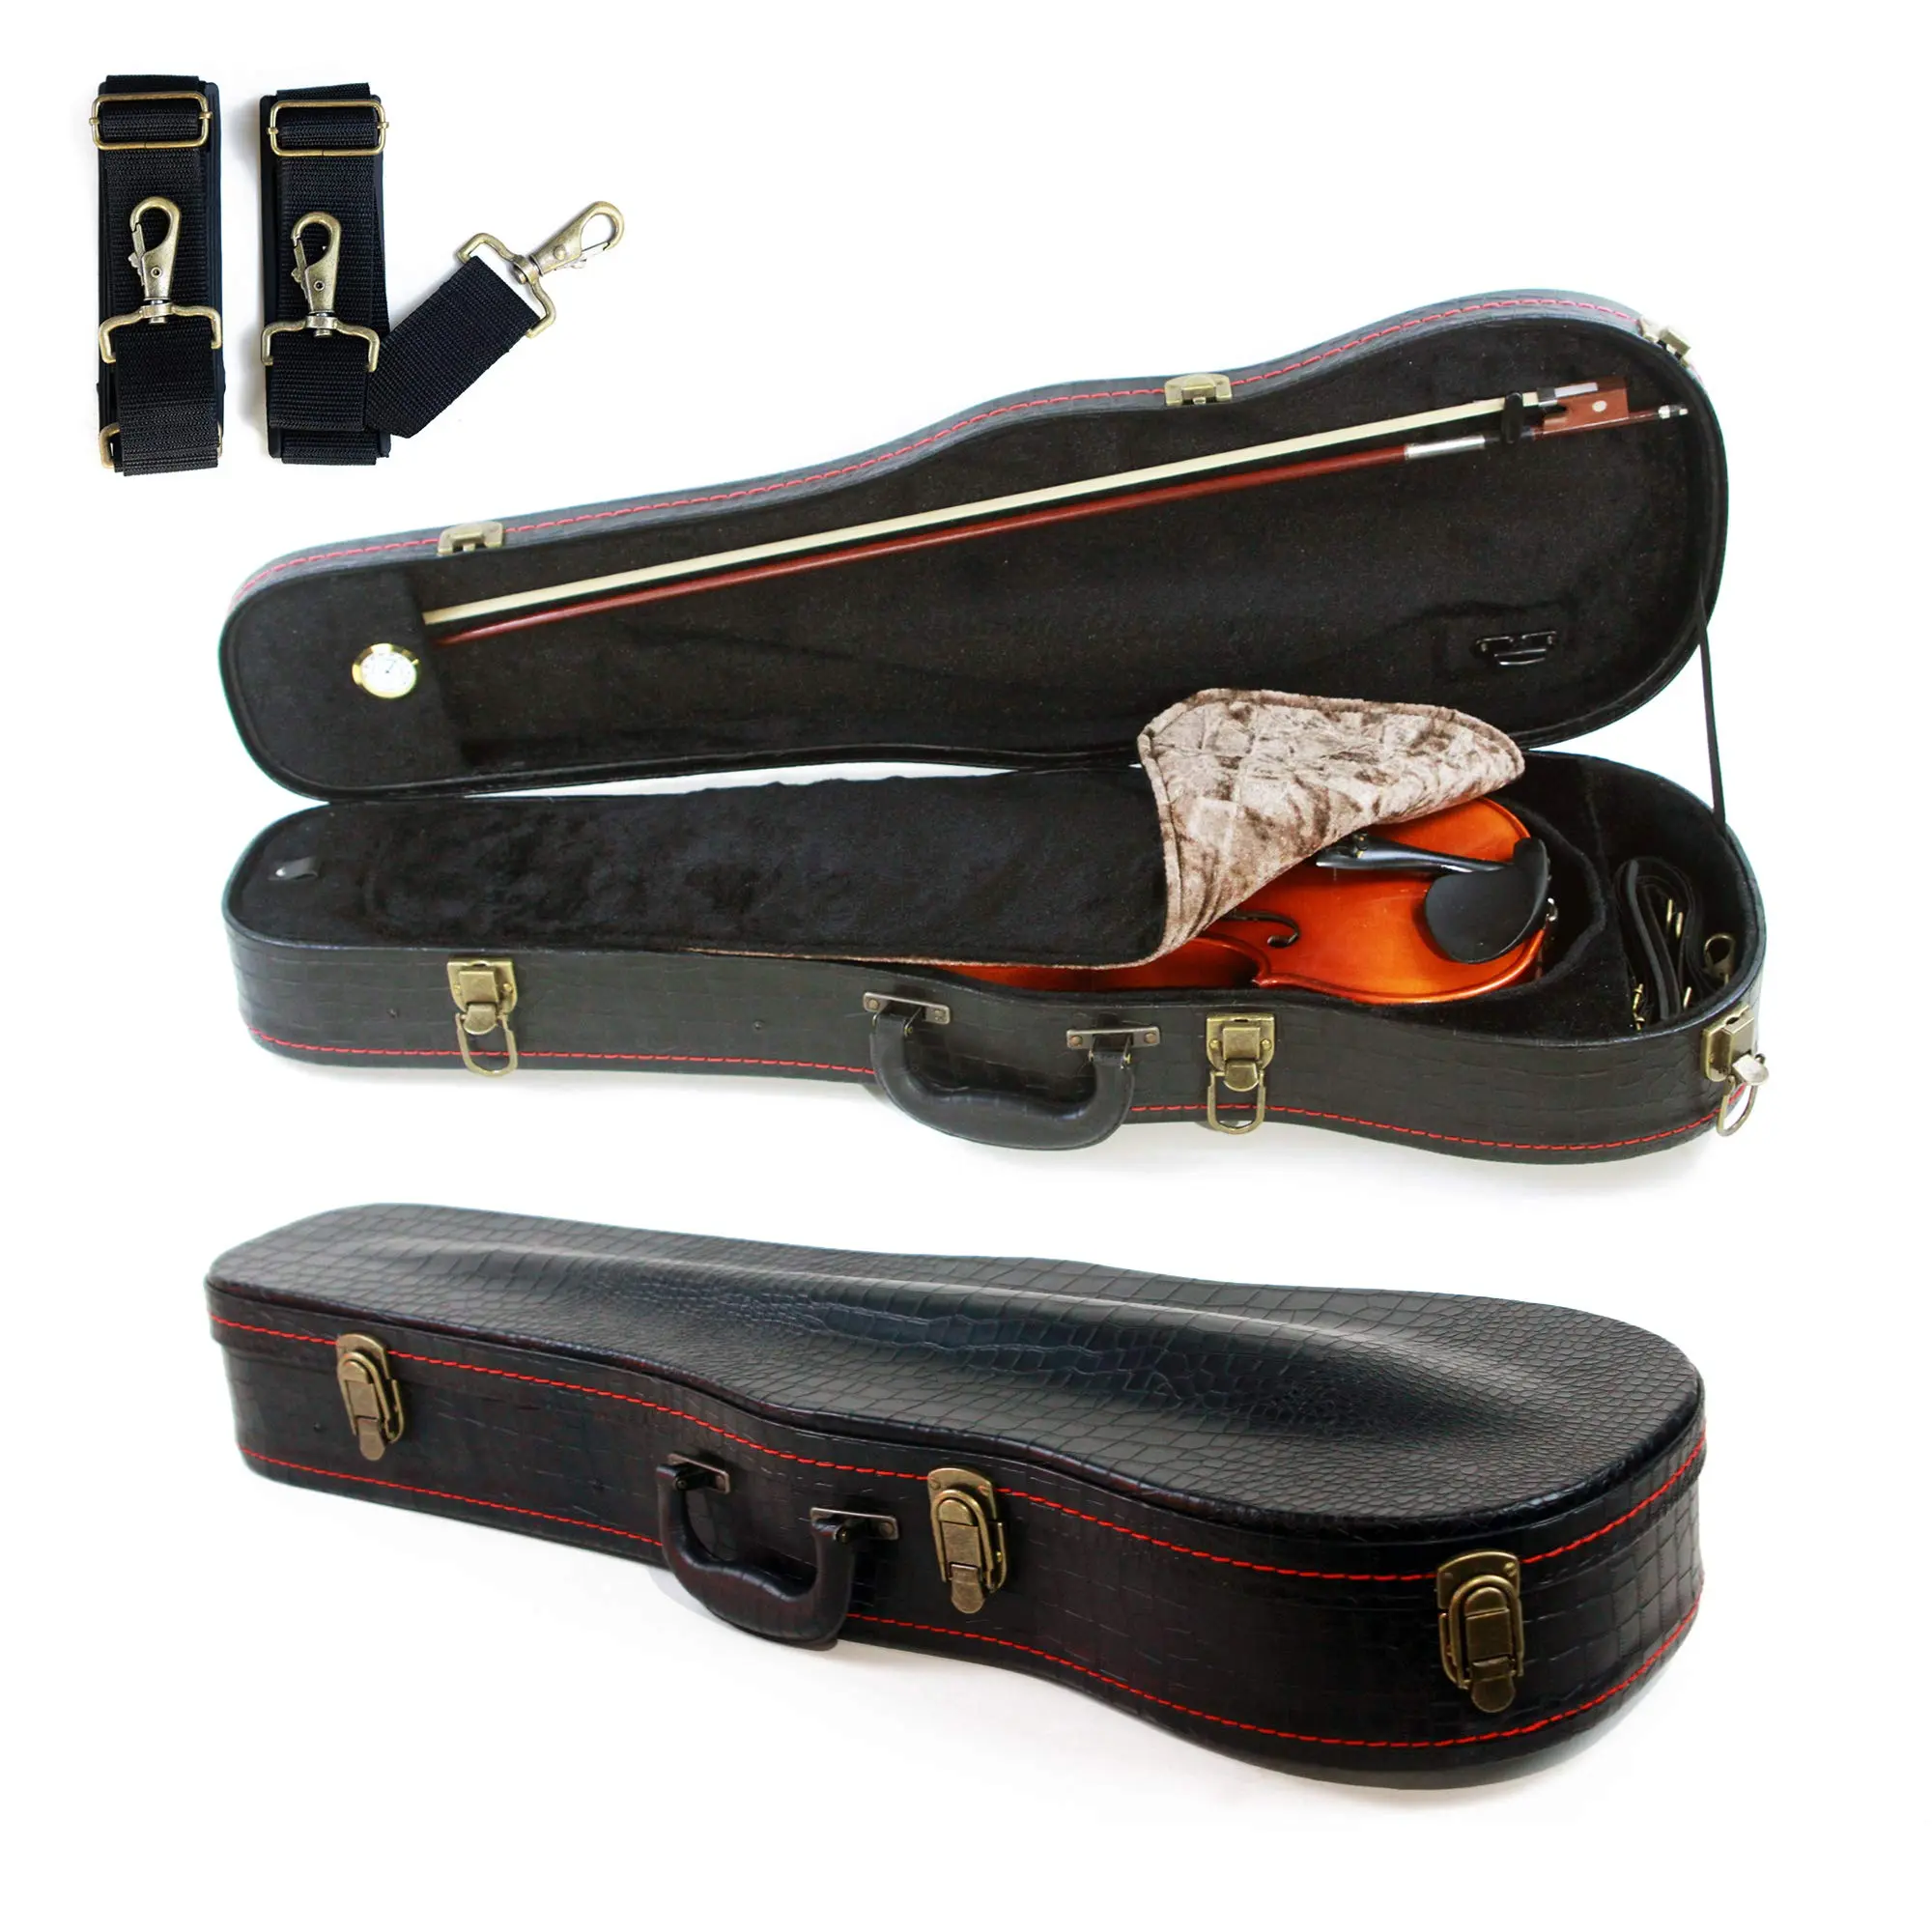 violin case - What is inside a violin case